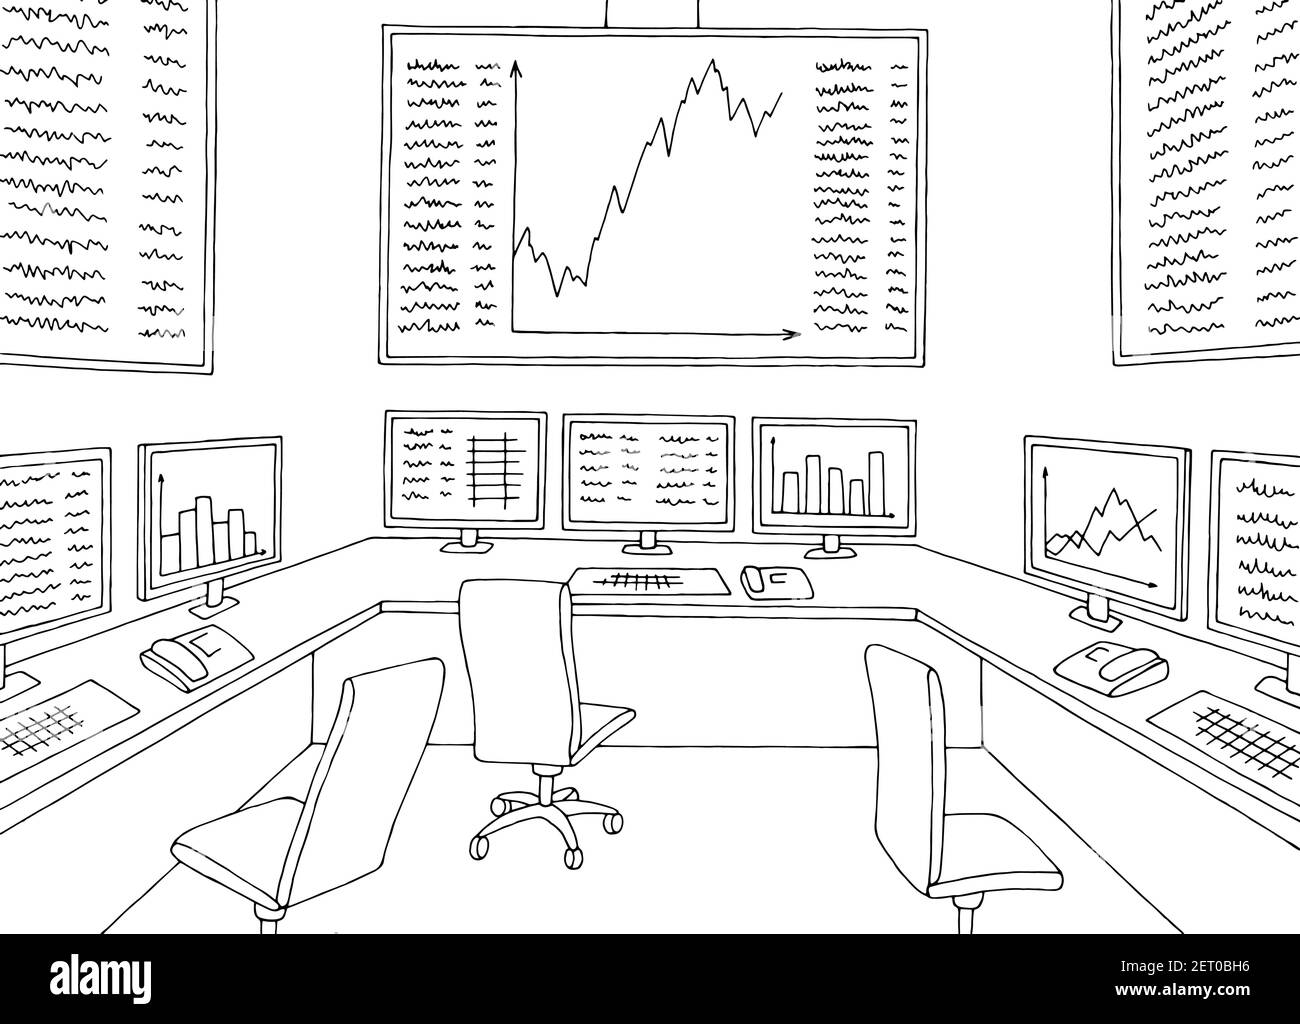 Stock exchange interior office graphic black white interior sketch illustration vector Stock Vector